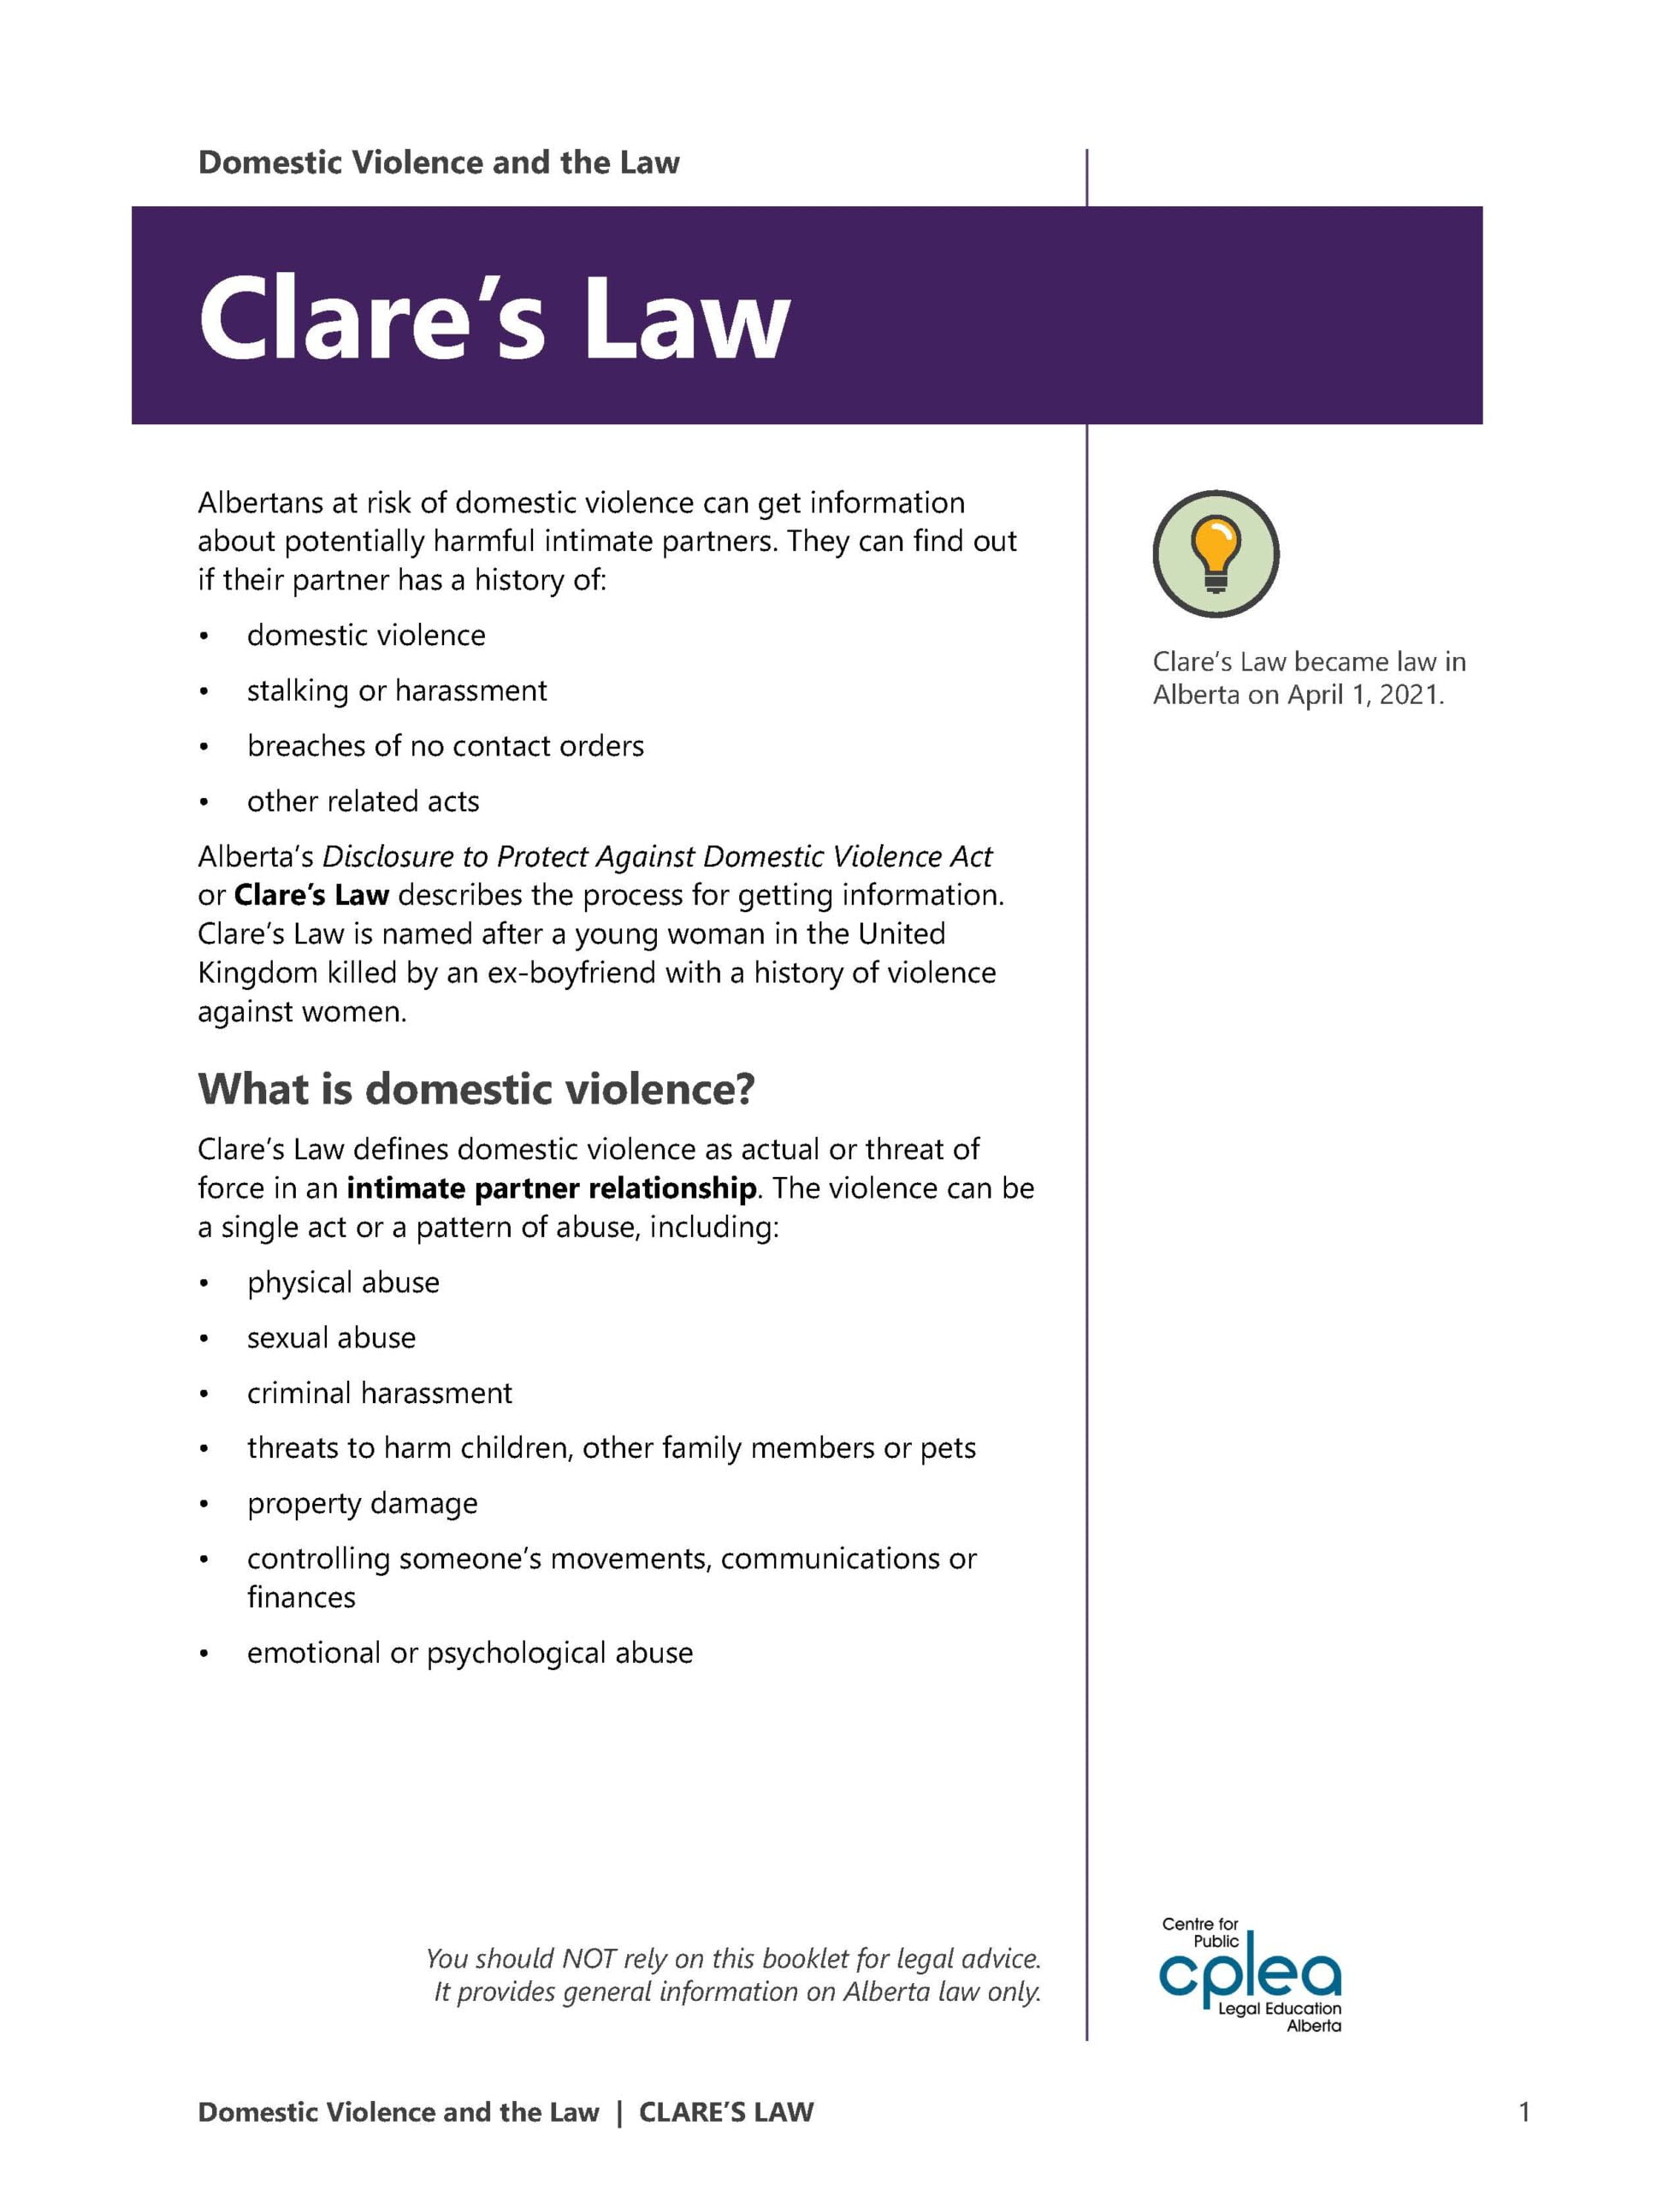 clare's law case study